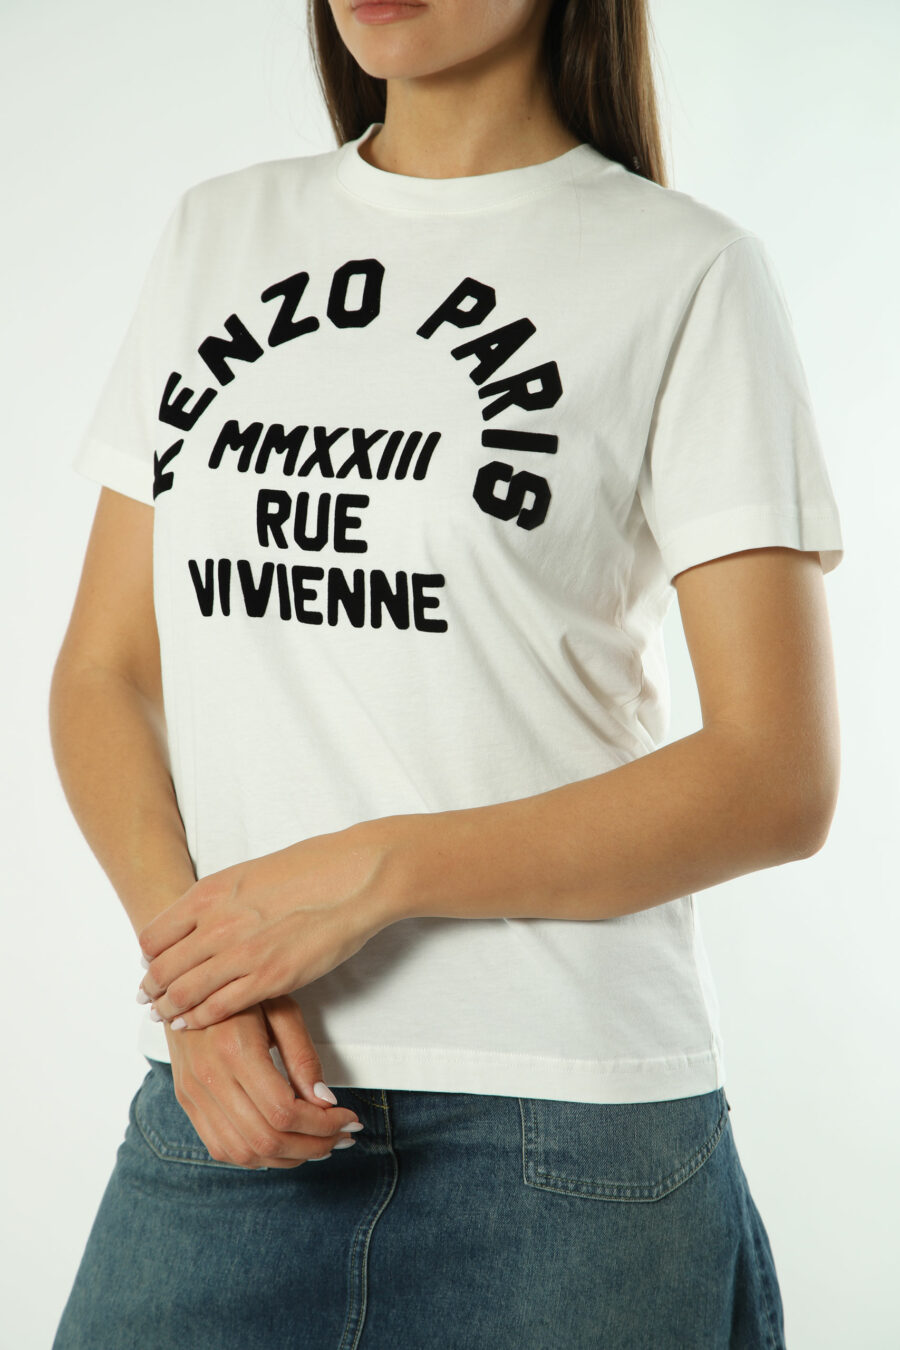 T-shirt blanc avec maxilogo noir "rue vivenne" - Photos 1321